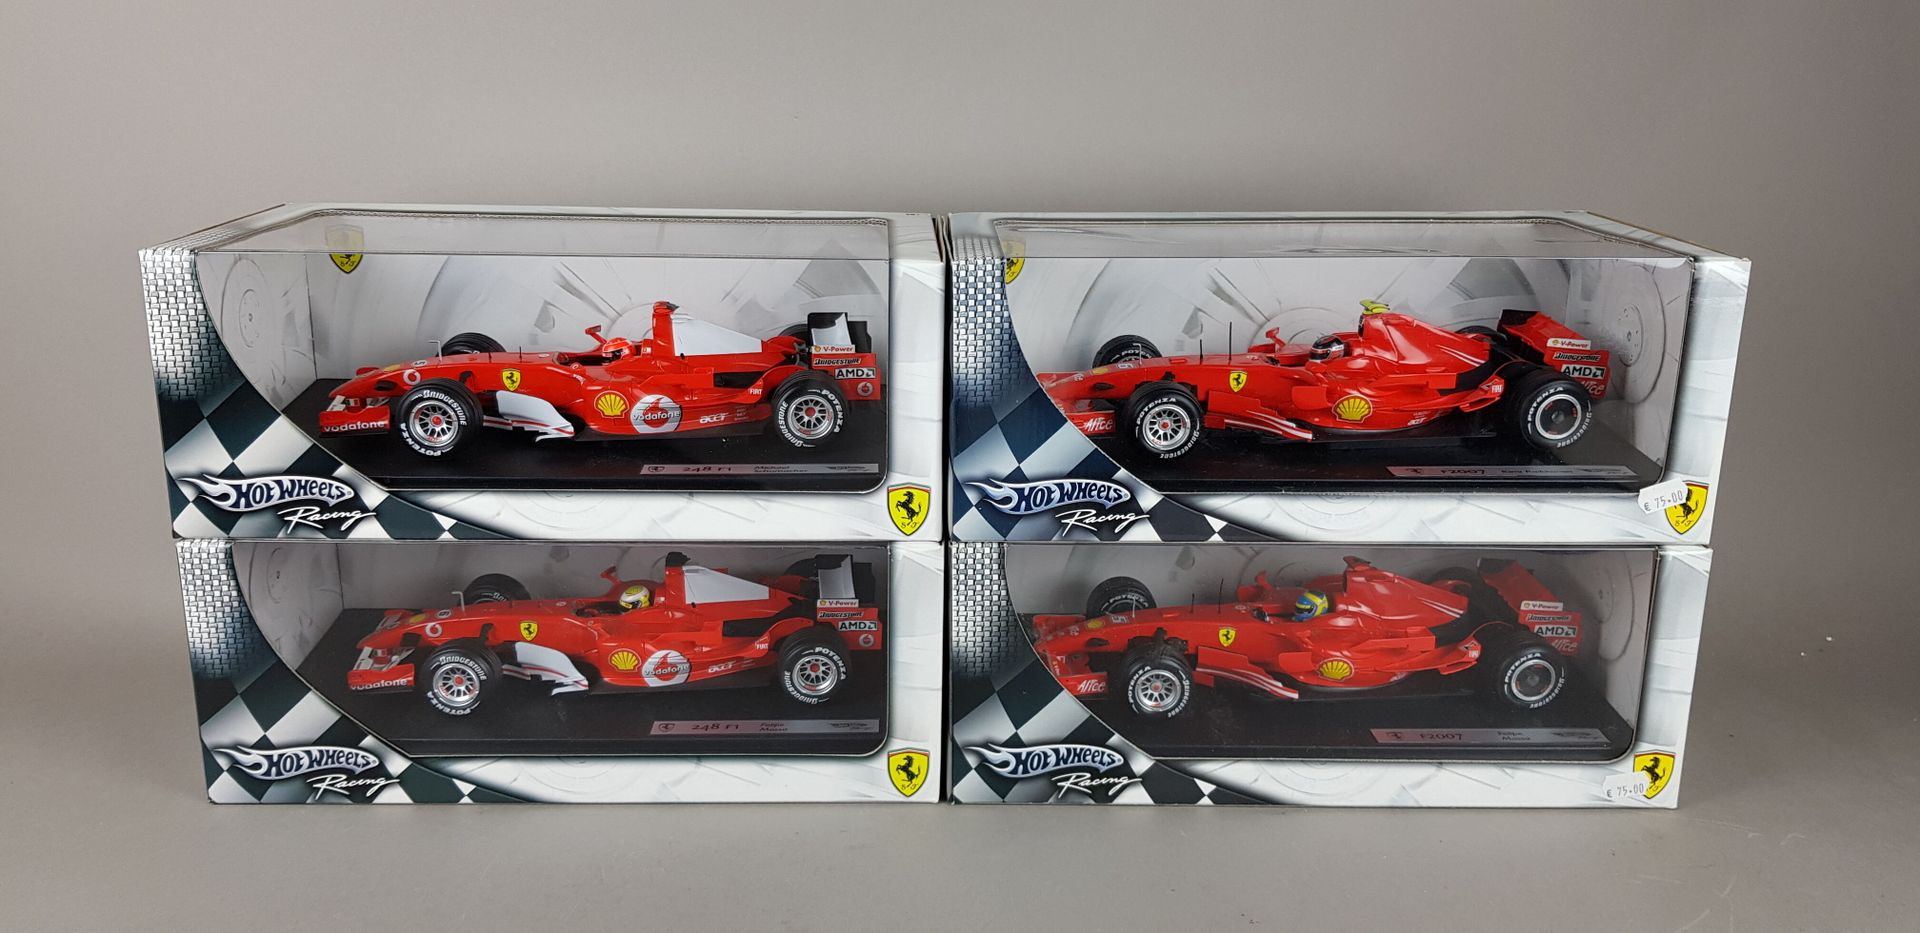 Null RUOTE CALDE - QUATTRO Ferrari in scala 1/18:

1x F2007 Felipe Massa 

1x 24&hellip;